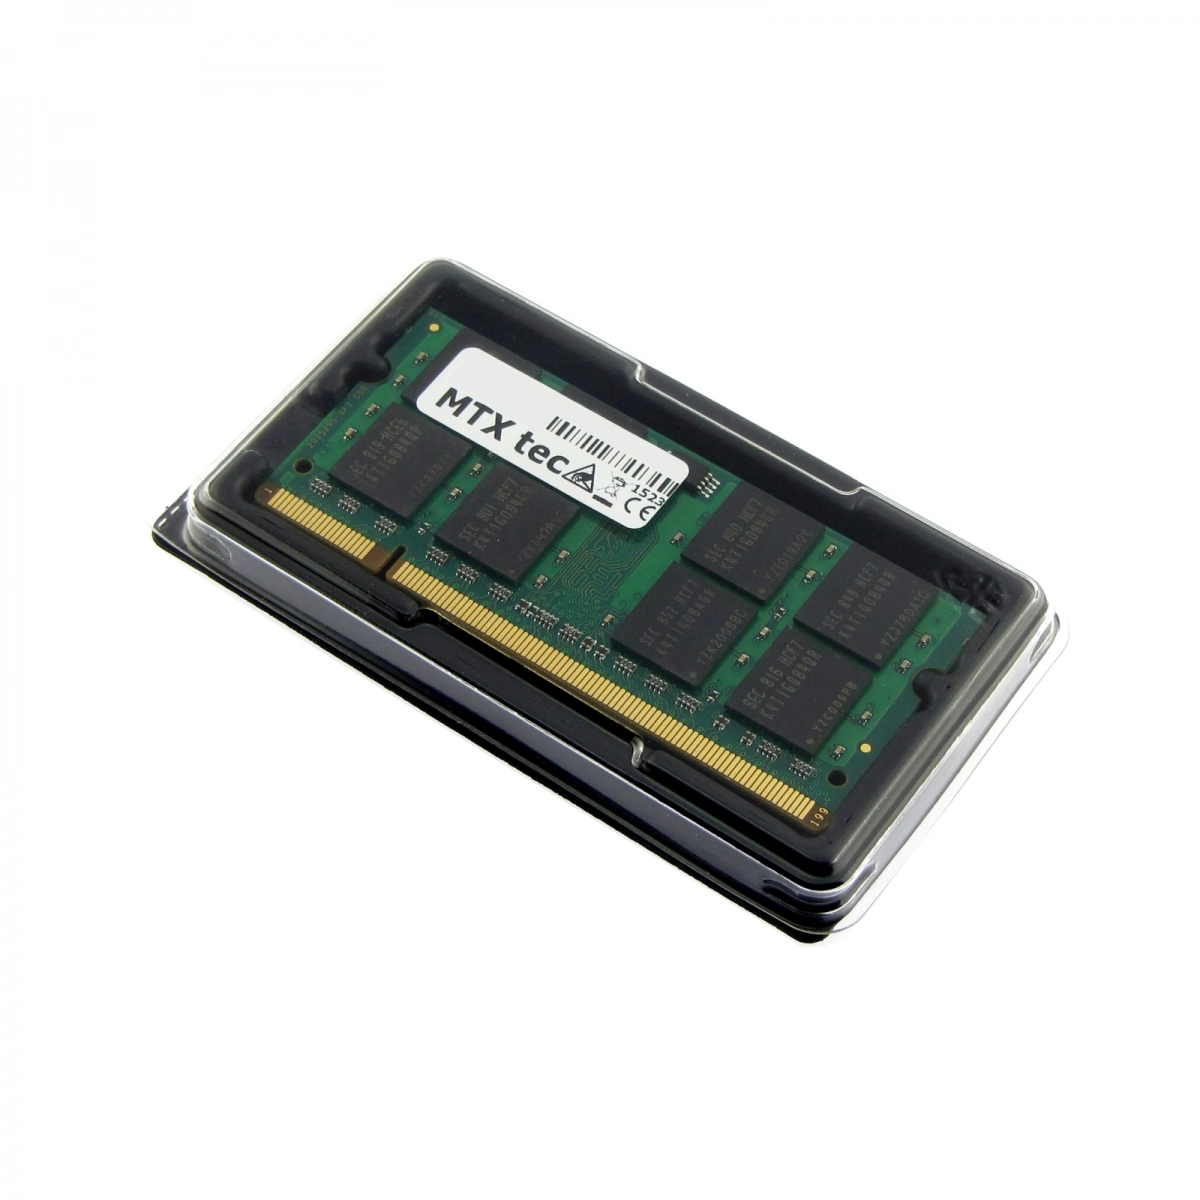 MTXtec Arbeitsspeicher 2 GB RAM für LENOVO ThinkPad T61 (8889)